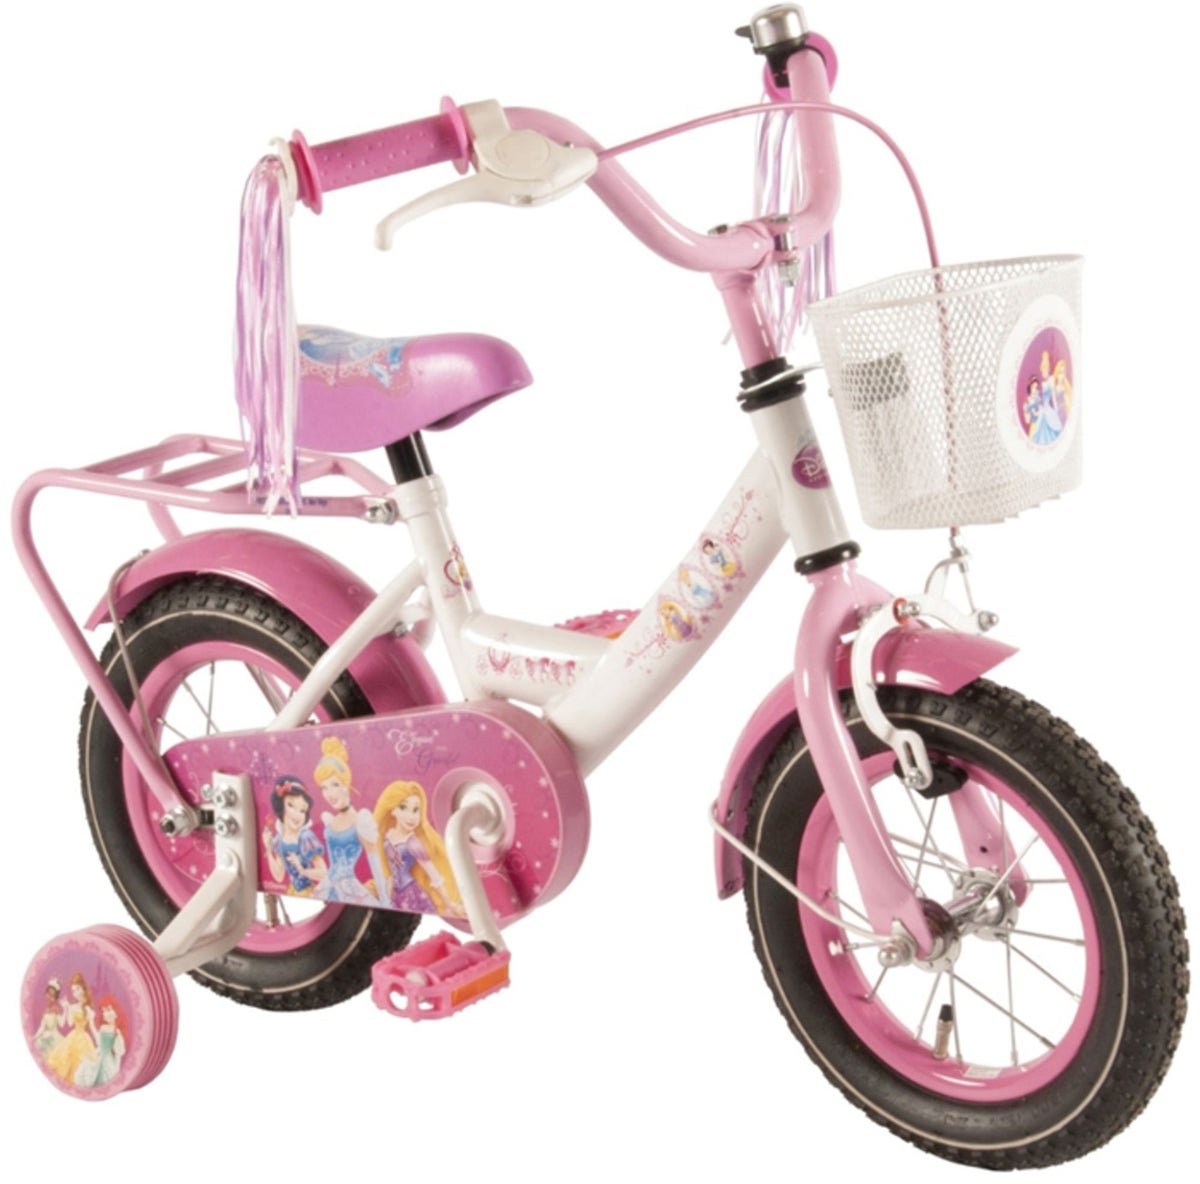 Disney princess cykel - Disney prinsesser cykel